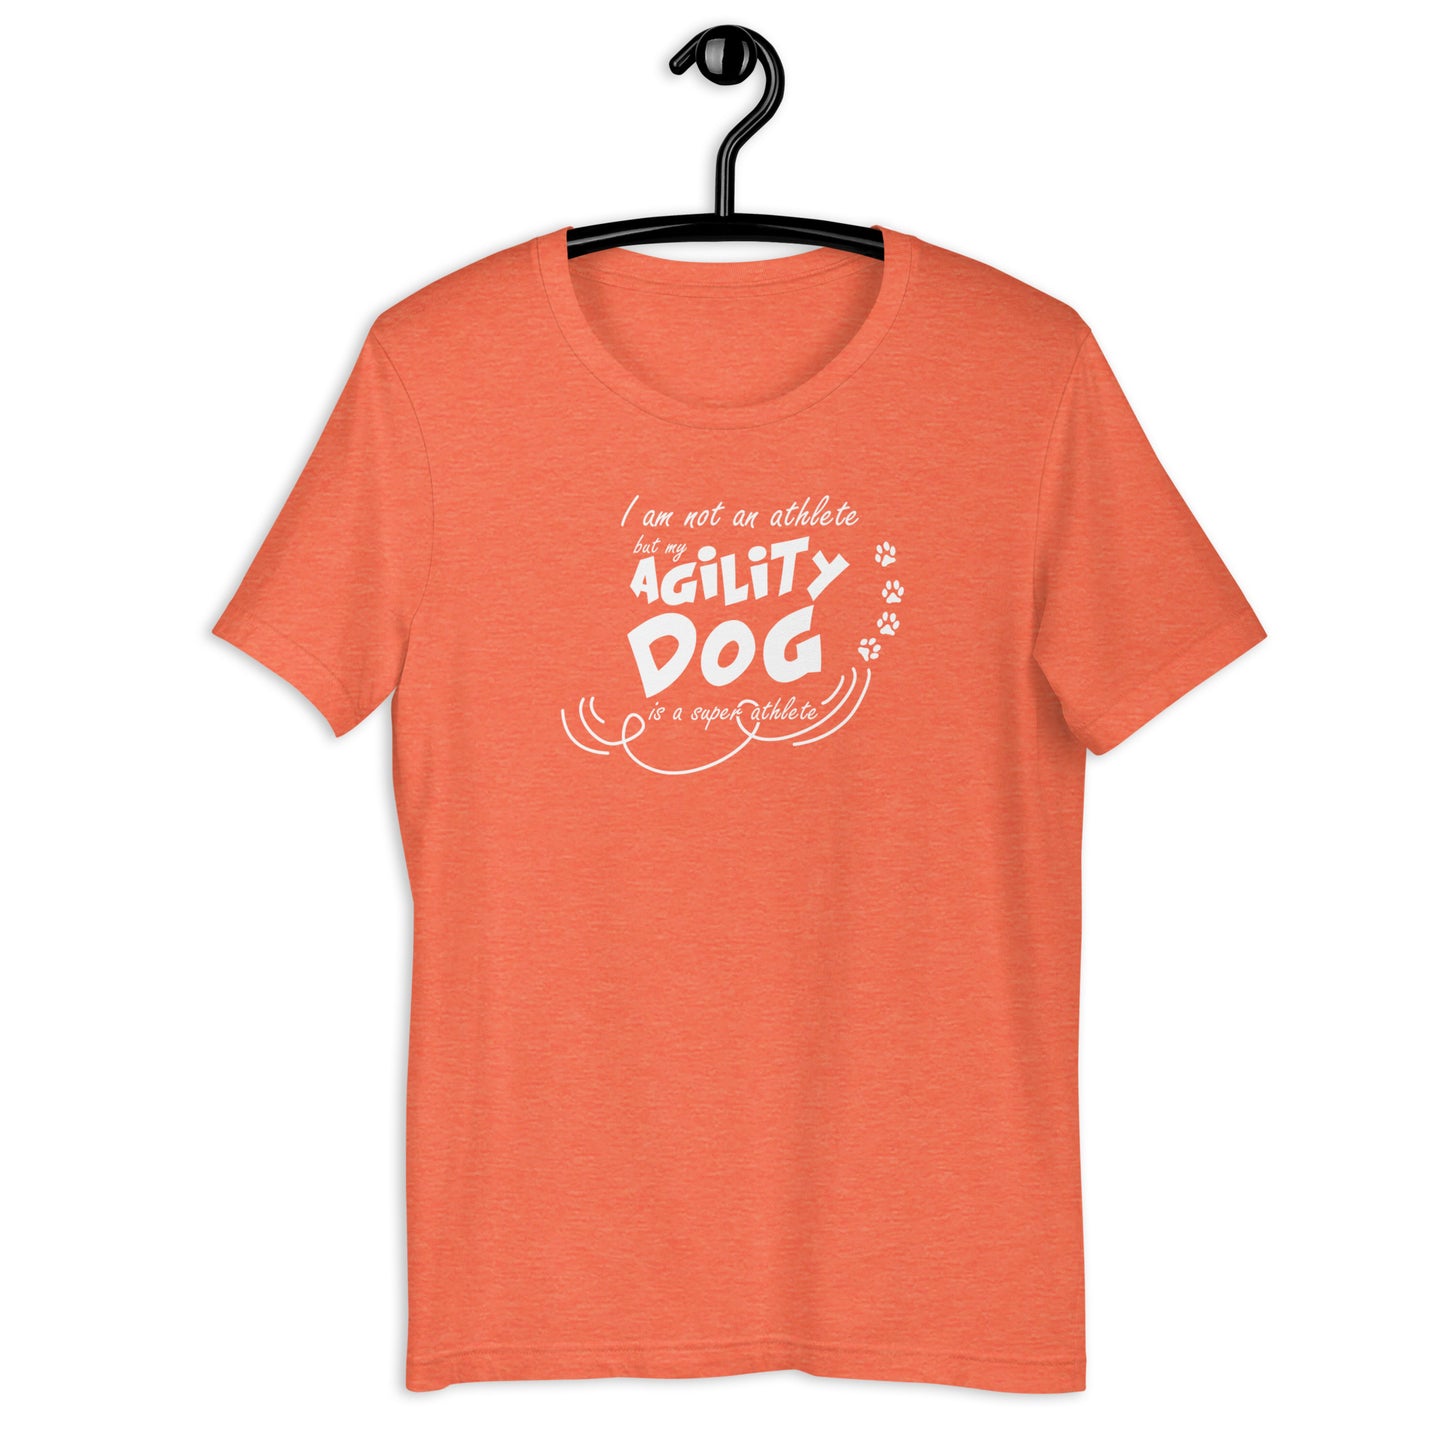 AGILITY DOG IS AN ATHLETE - Unisex t-shirt